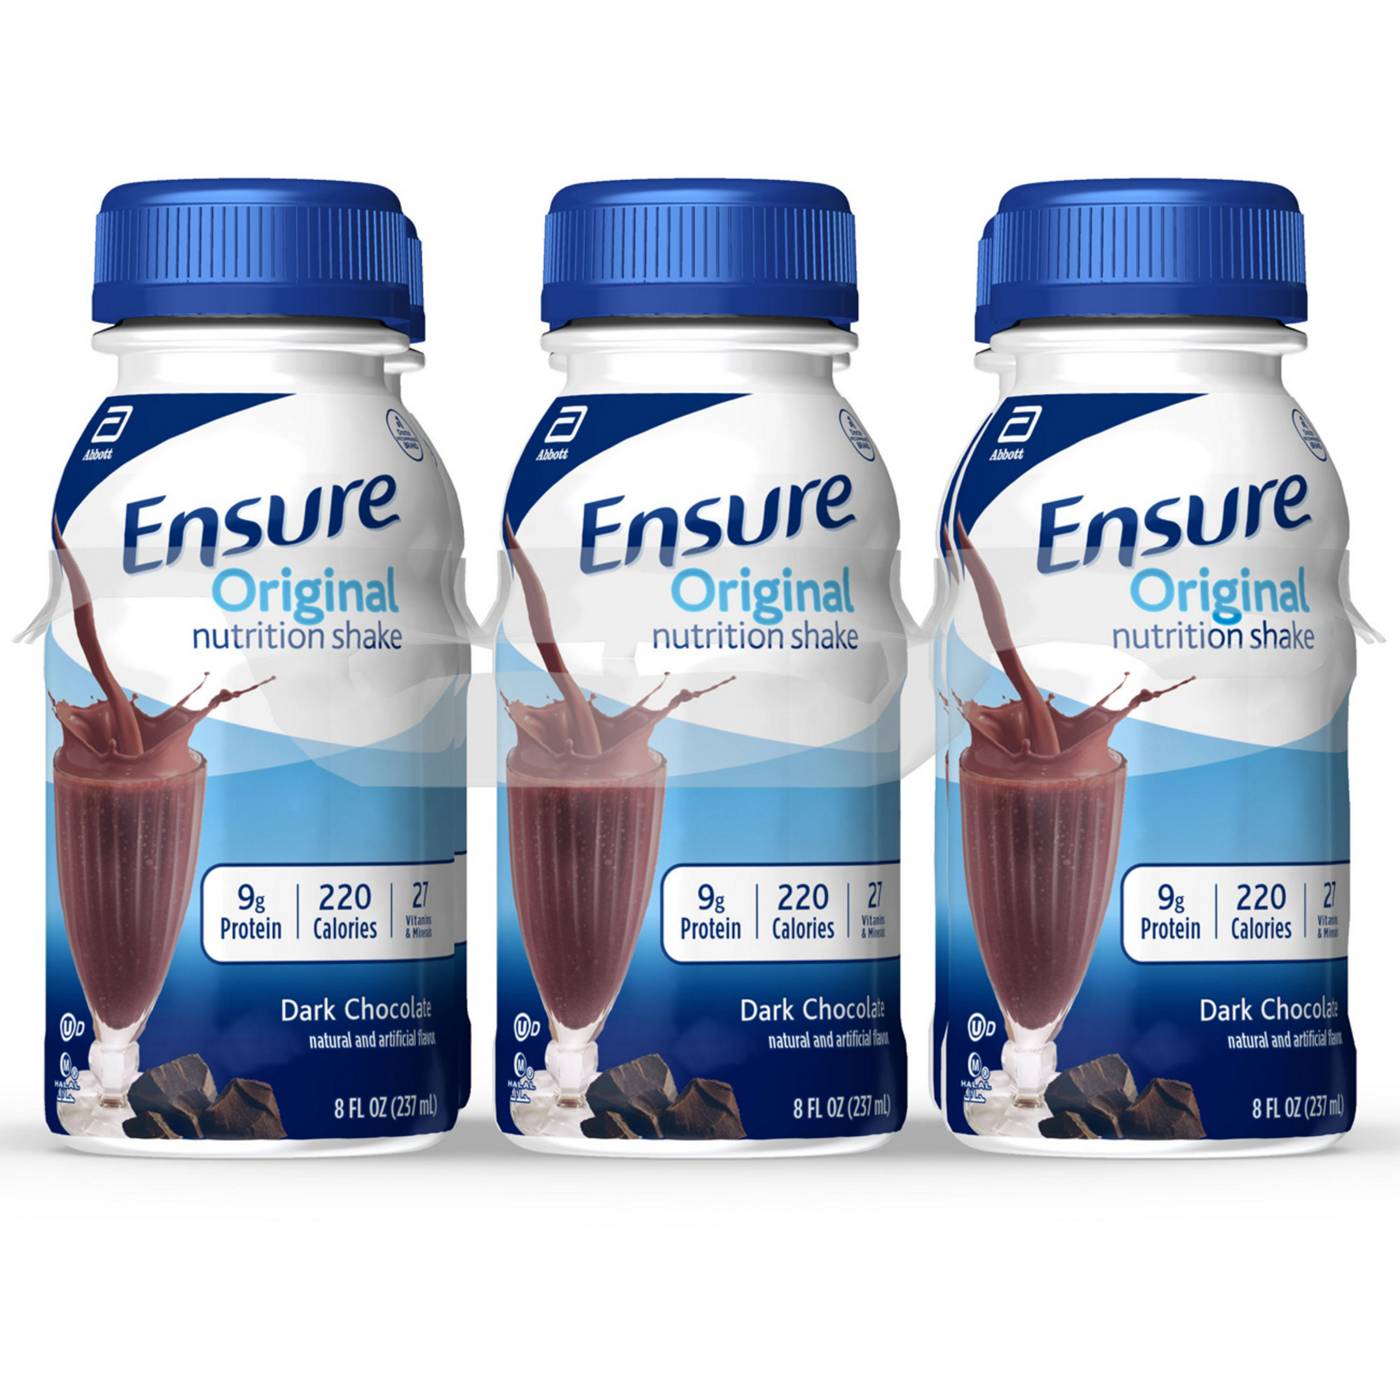 Ensure Original Nutrition Shake - Dark Chocolate; image 1 of 2